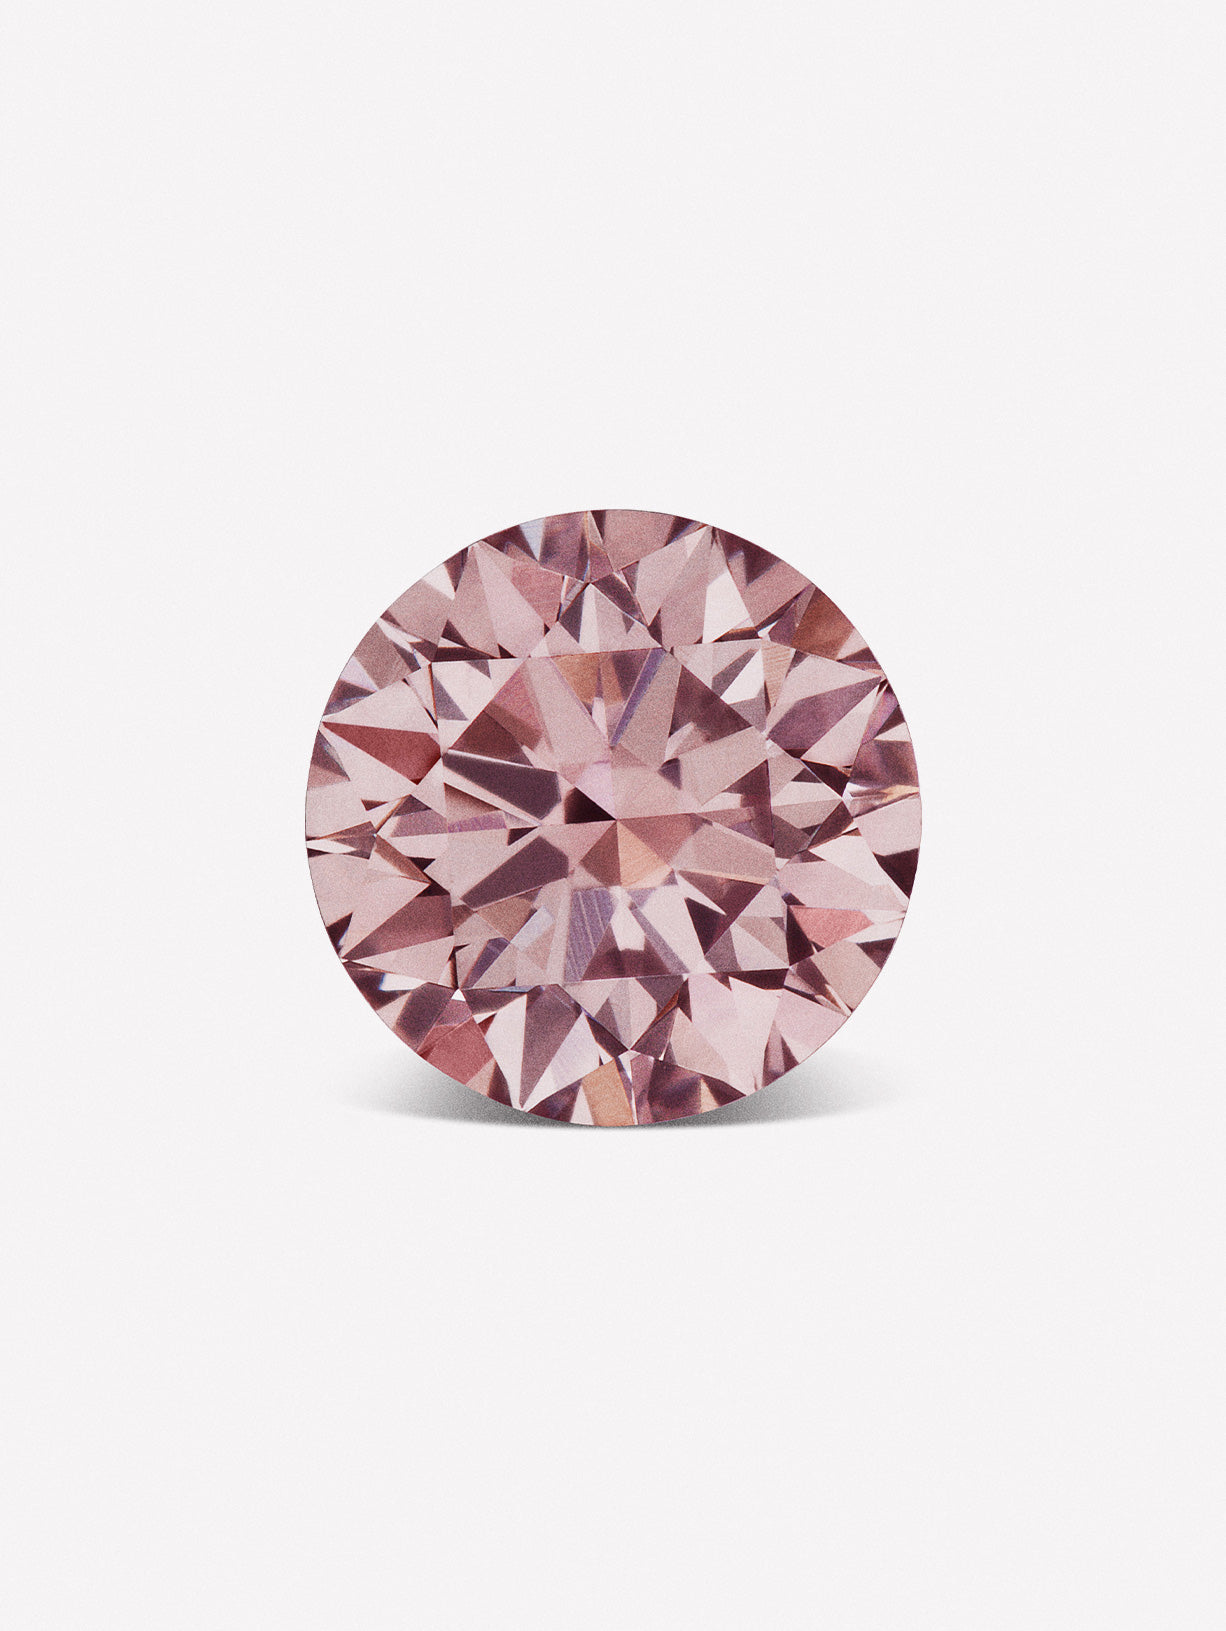 Round Brilliant Argyle Pink™ Diamond - Pink Diamonds, J FINE - J Fine, Pink Diamond - Pink Diamond Jewelry, round-brilliant-argyle-pink™-diamond-2 - Argyle Pink Diamonds